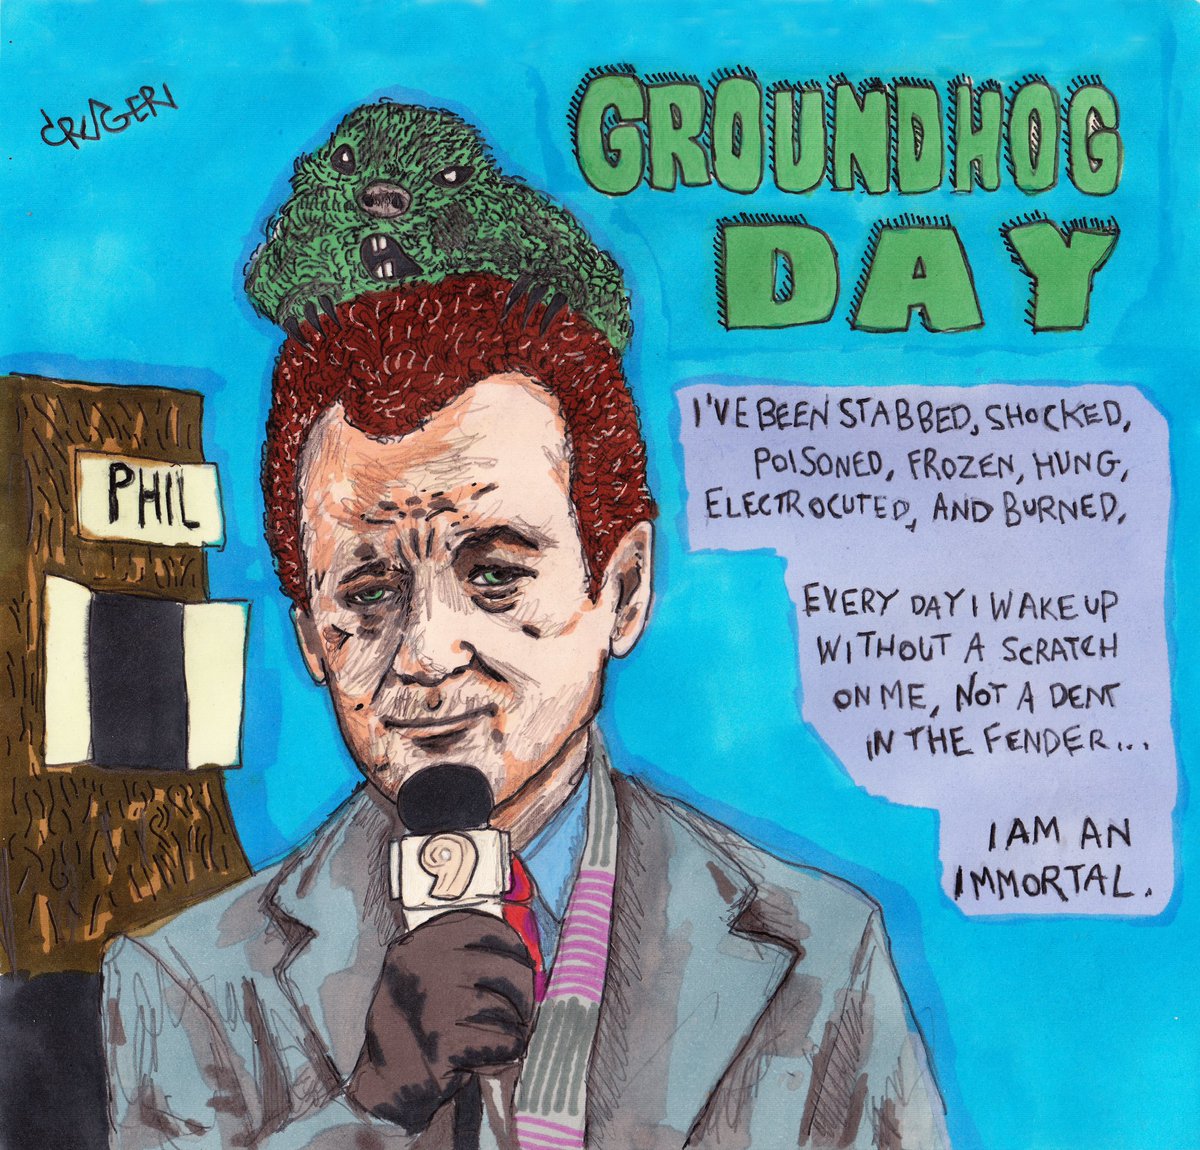 2. Groundhog Day (1993)